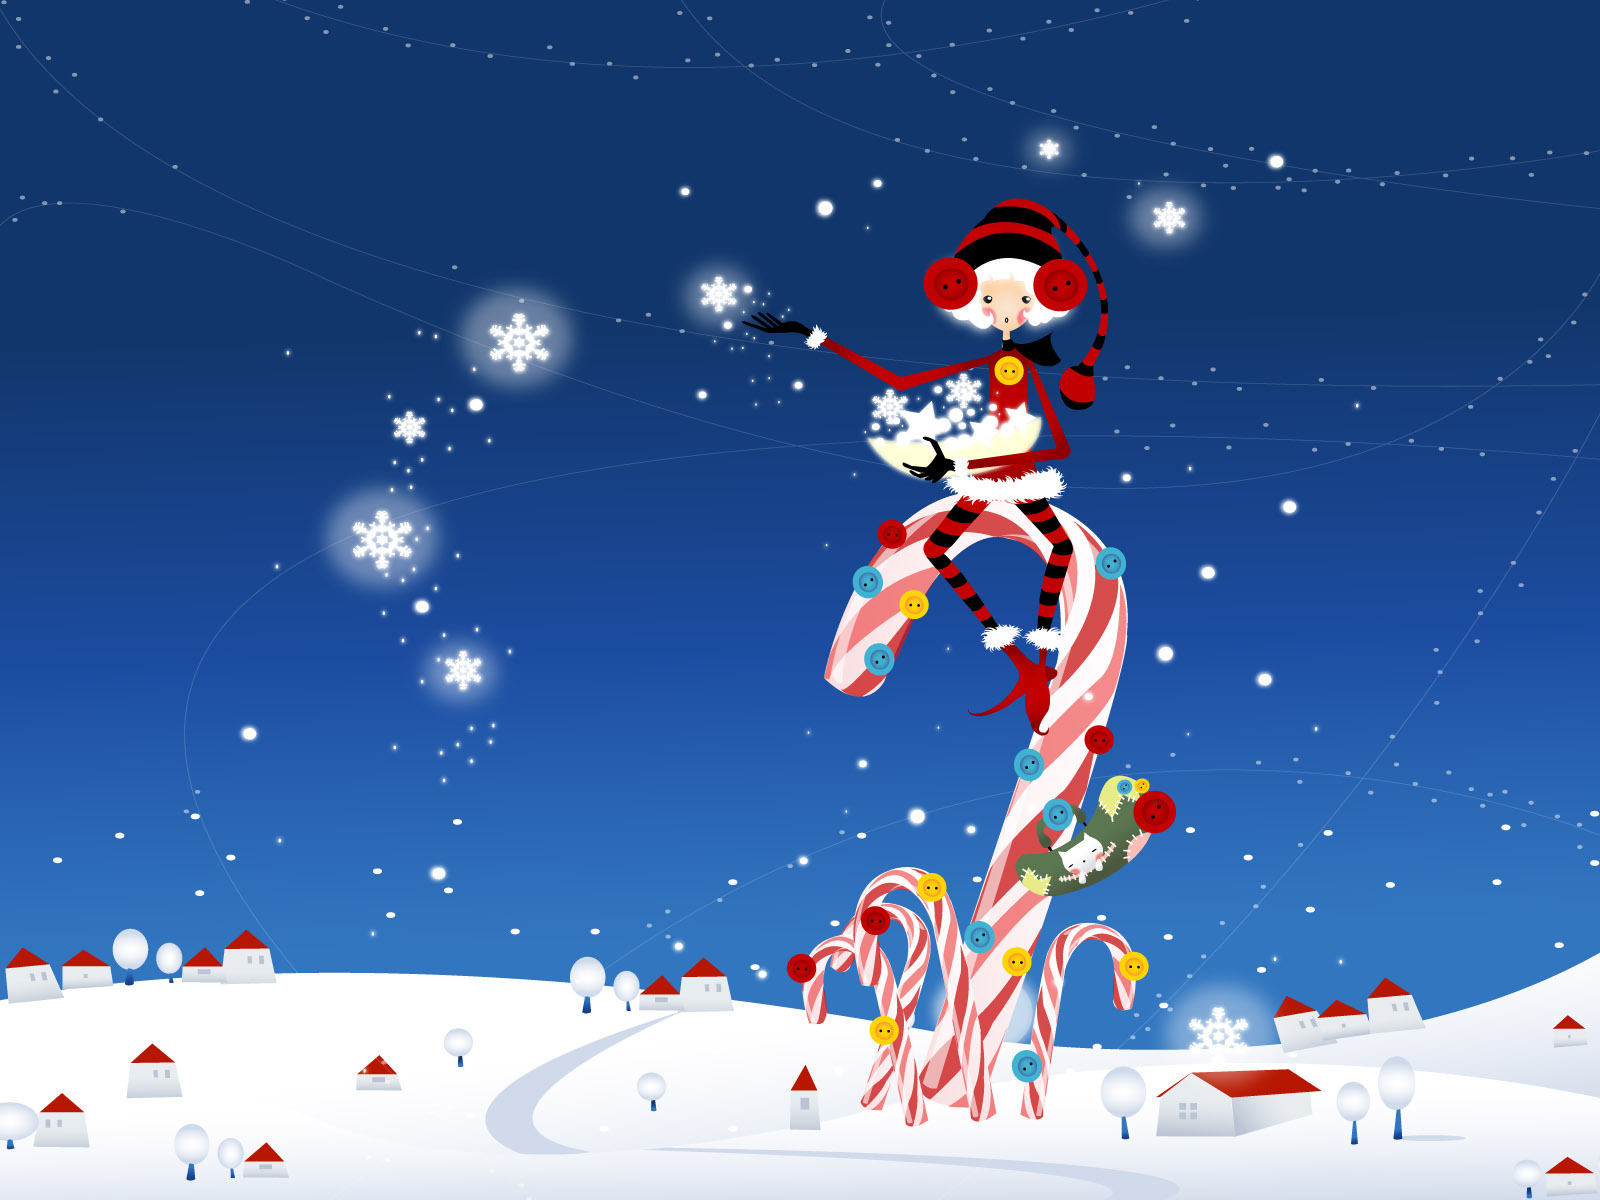 40 Free Animated Christmas Wallpaper for Desktop